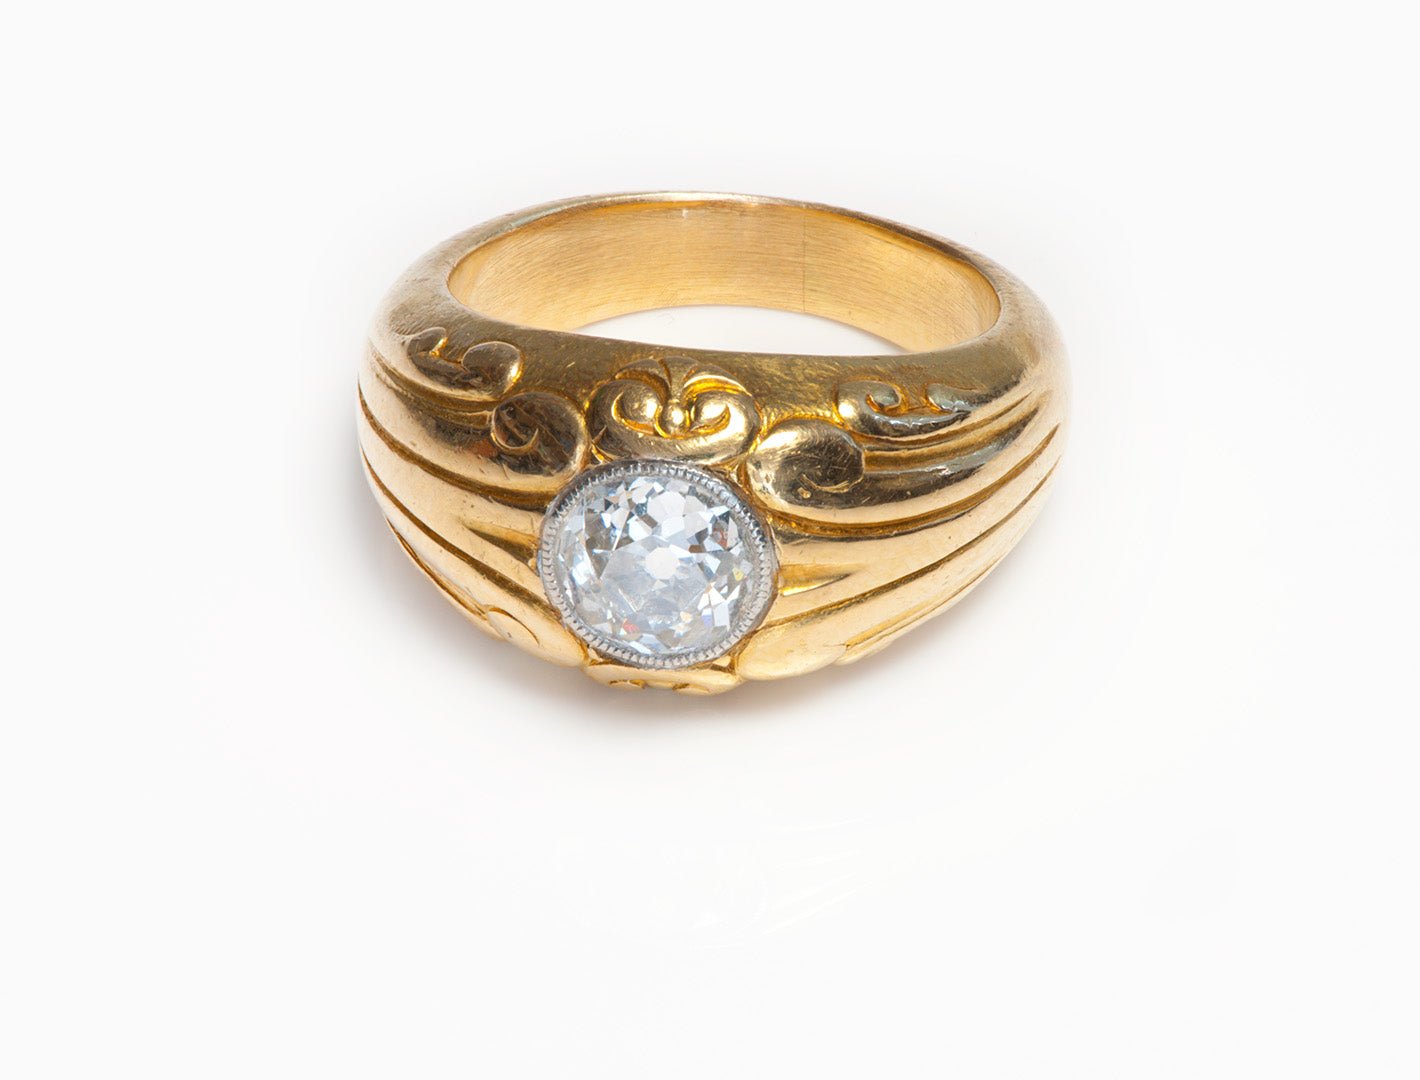 Belle Epoque 18K Gold Old Mine Cut Diamond Ring